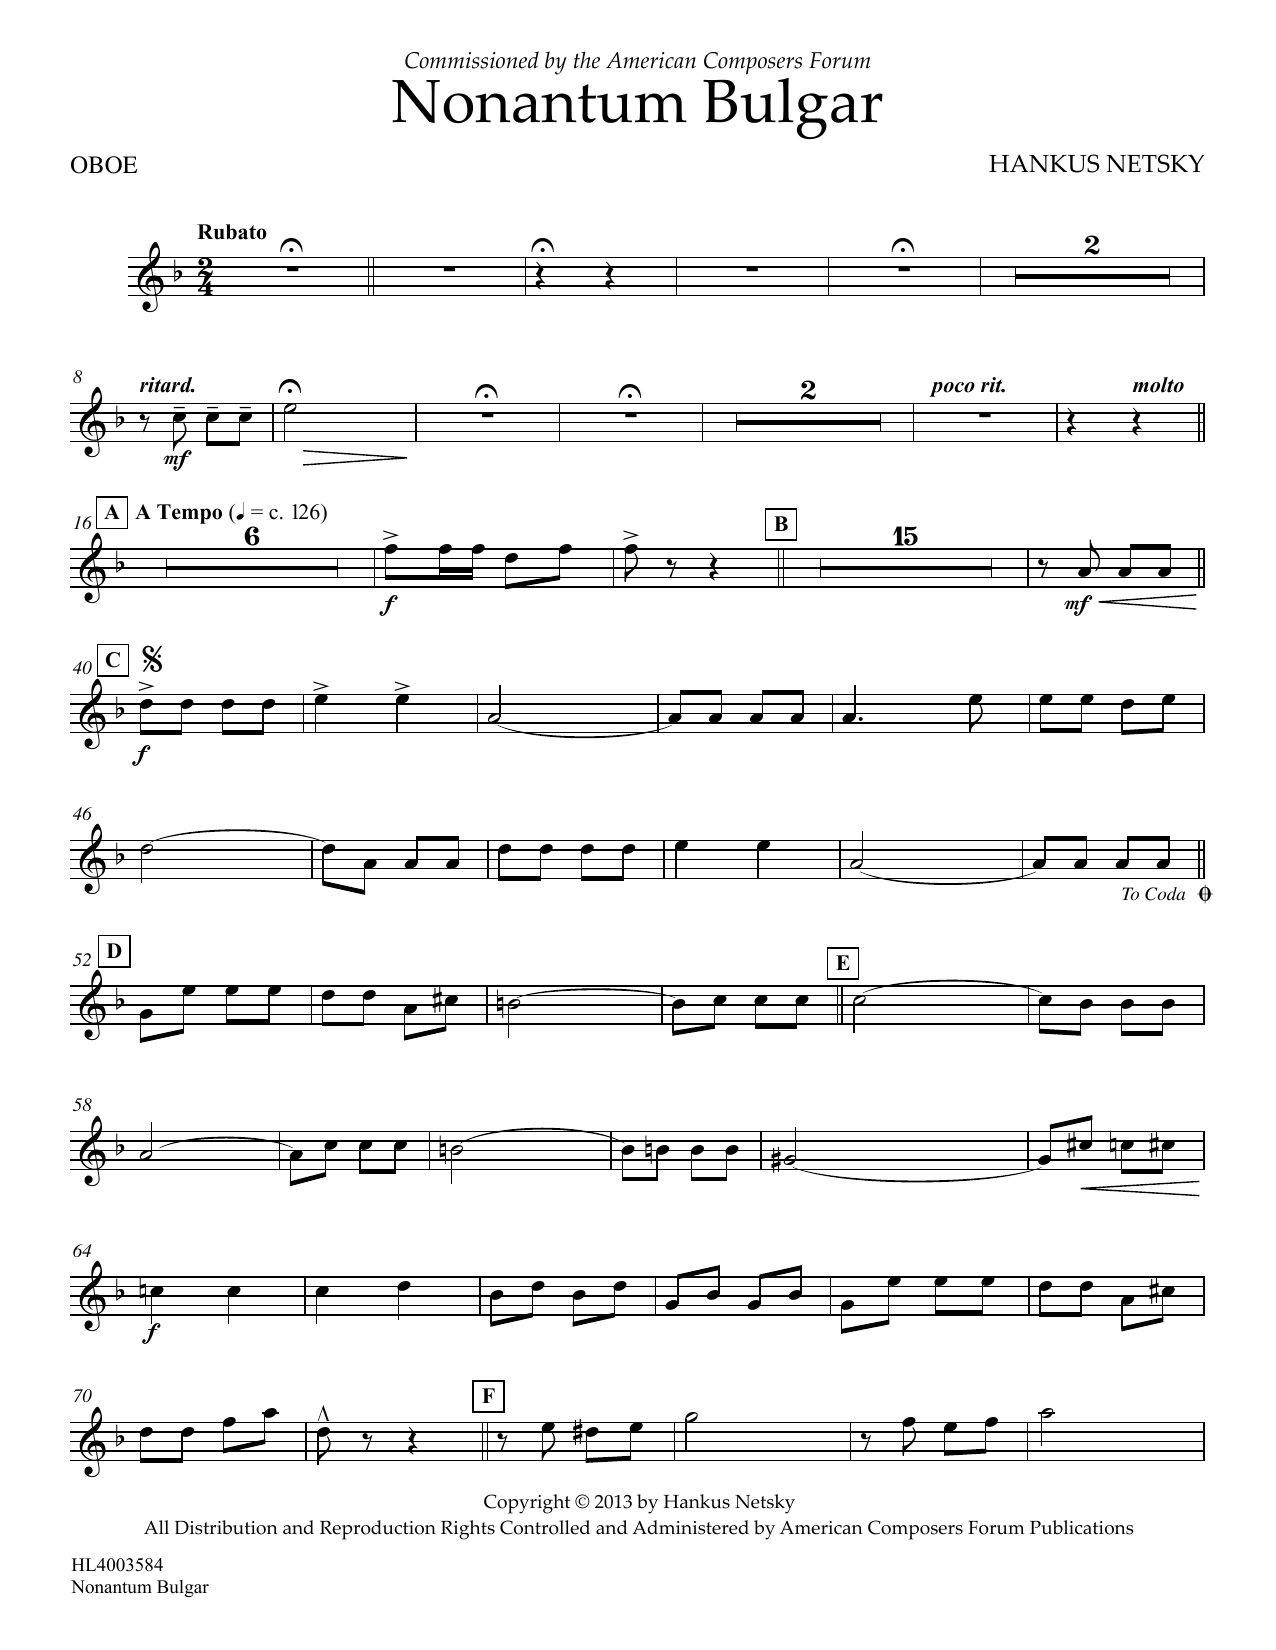 Hankus Netsky Nonantum Bulgar - Oboe Sheet Music Notes & Chords for Concert Band - Download or Print PDF